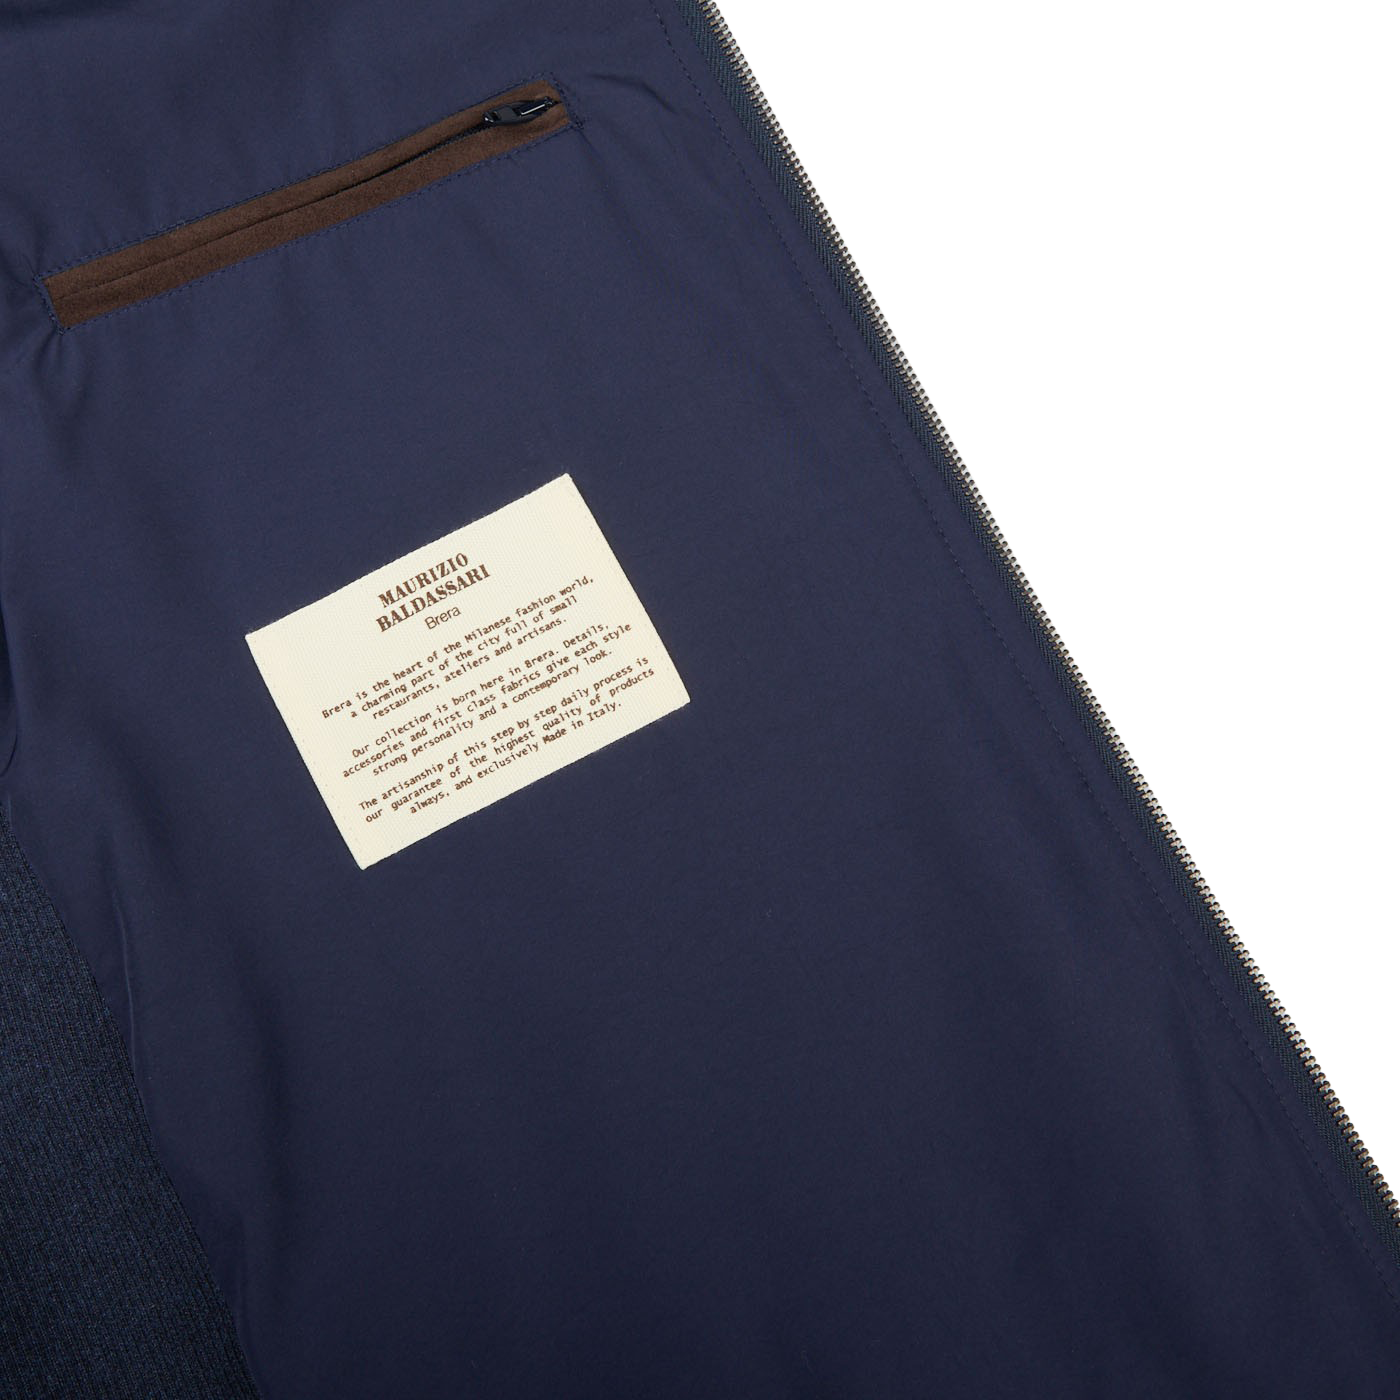 A Maurizio Baldassari Denim Blue Water Repellent Pure Cashmere Gilet with a label on it.